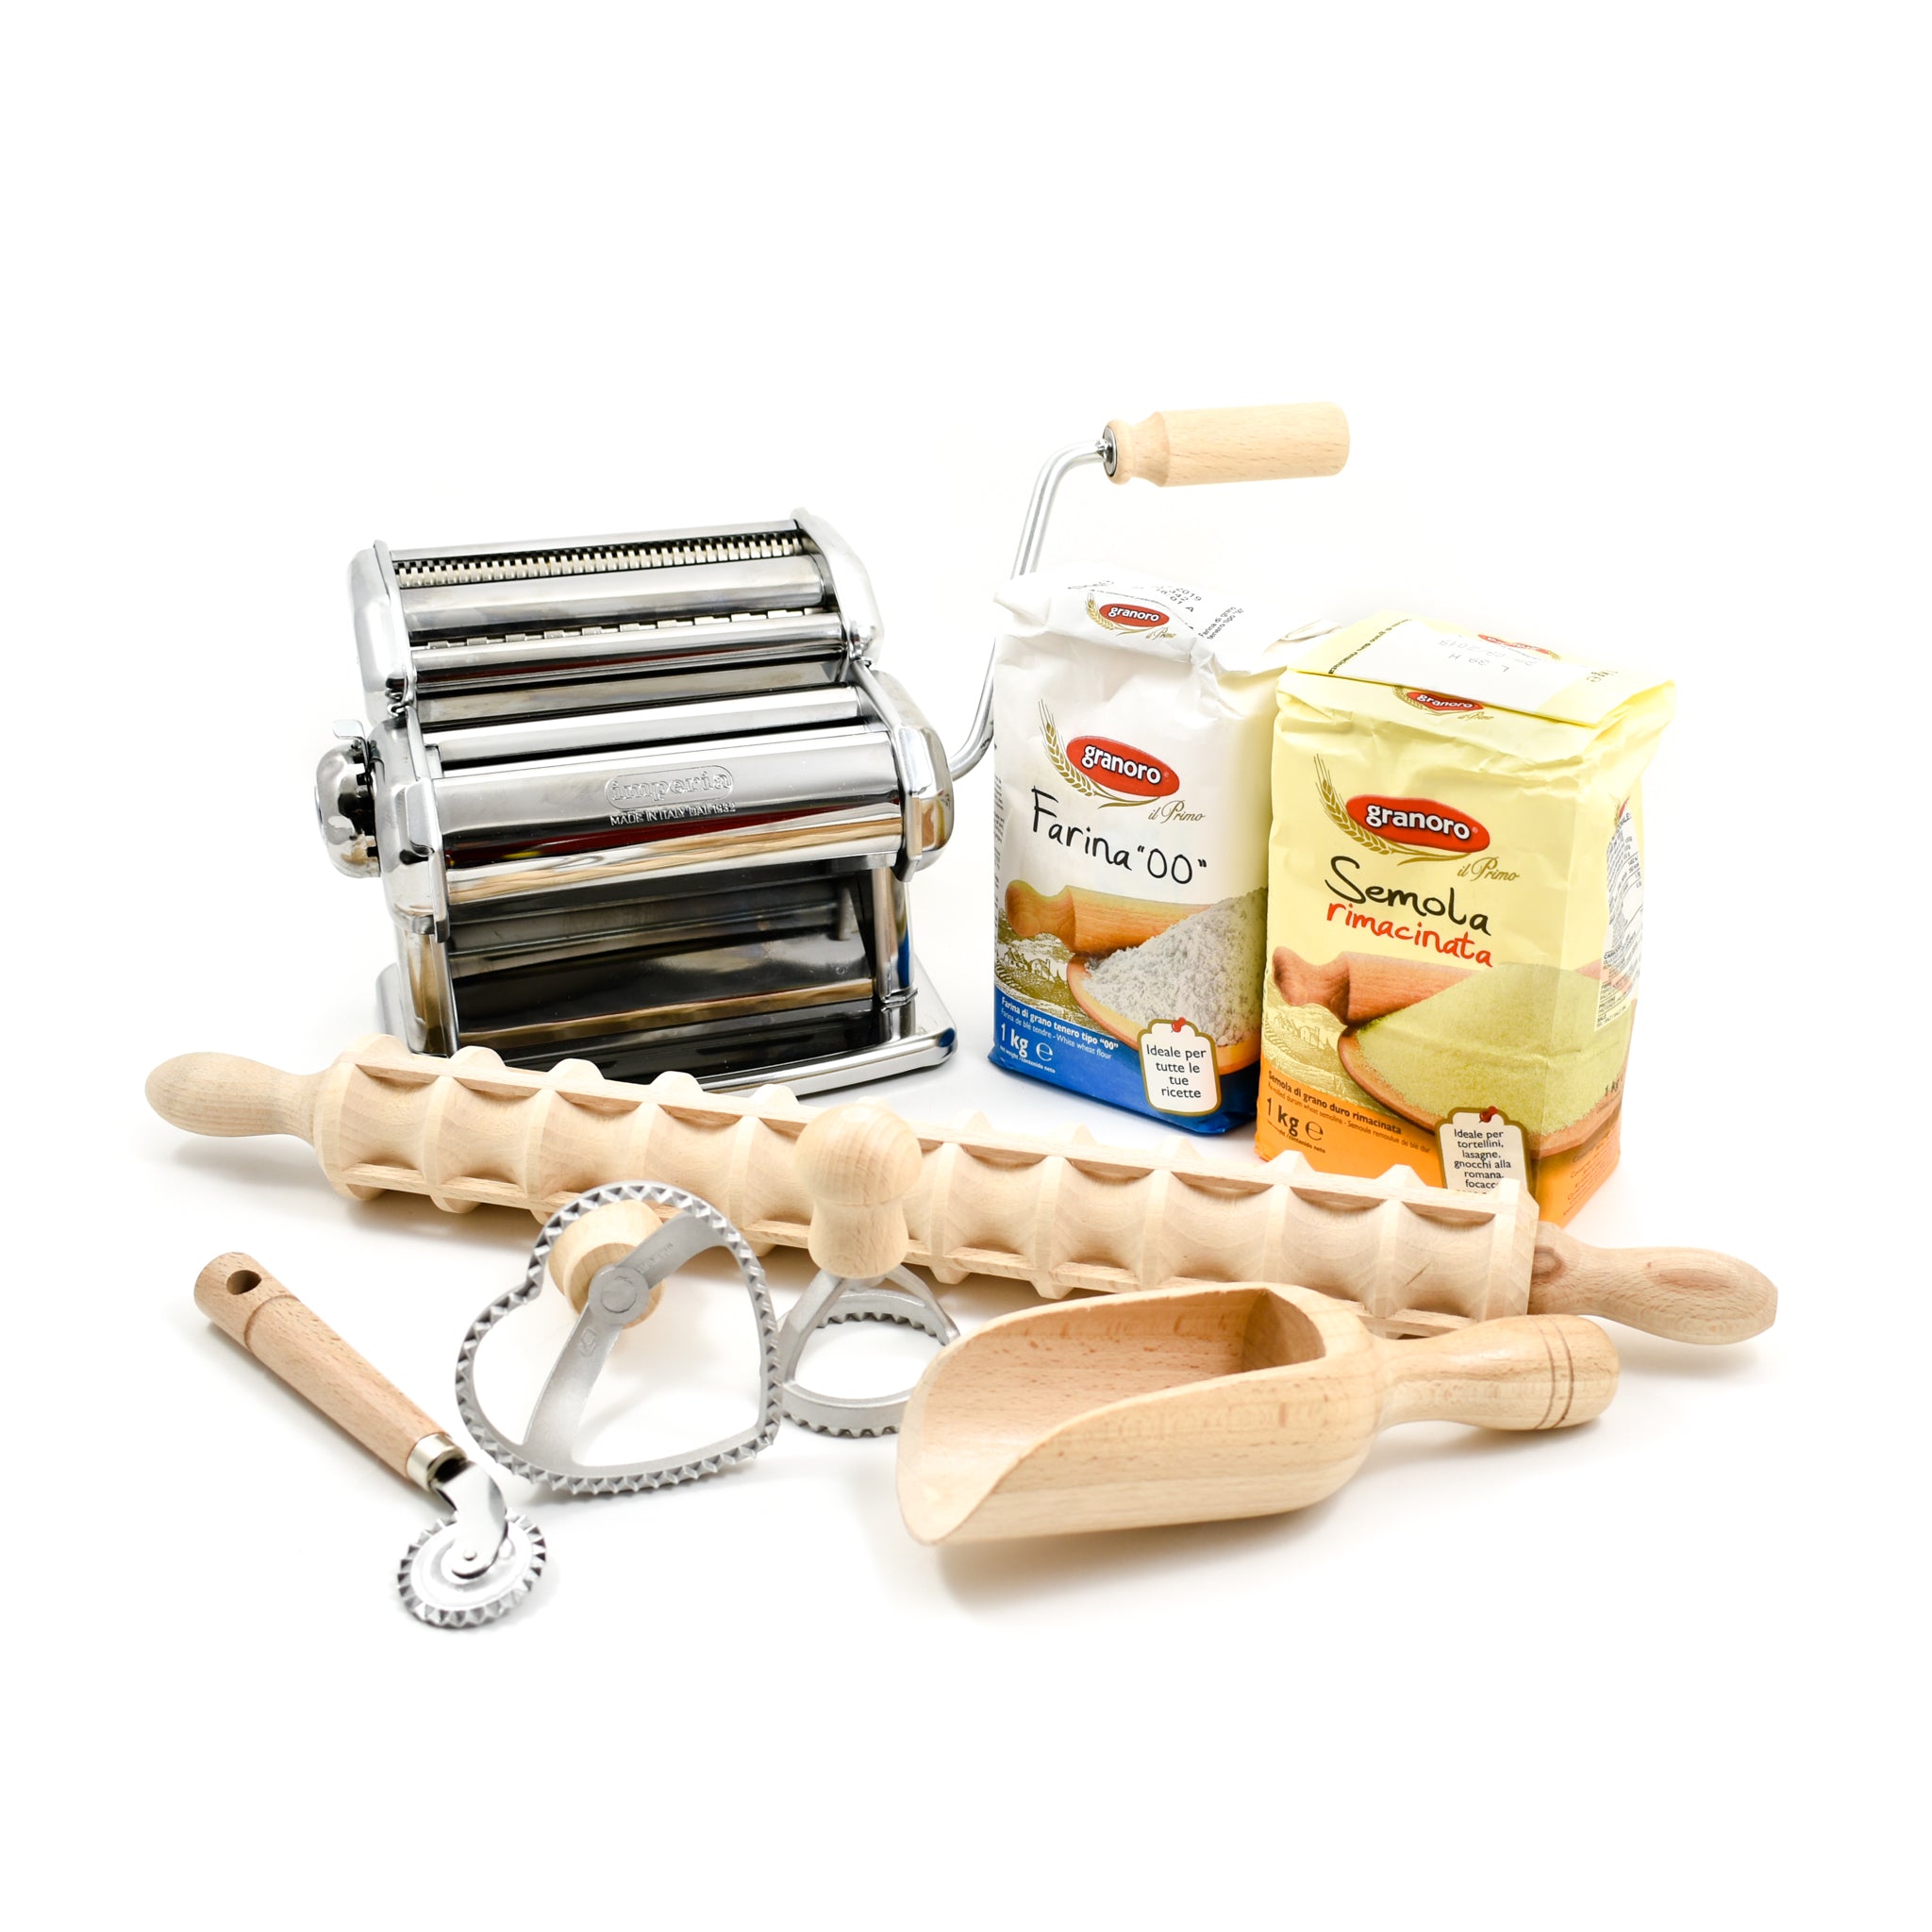 https://cdn.shopify.com/s/files/1/0111/1729/7722/products/complete-pasta-making-kit.jpg?v=1569548366